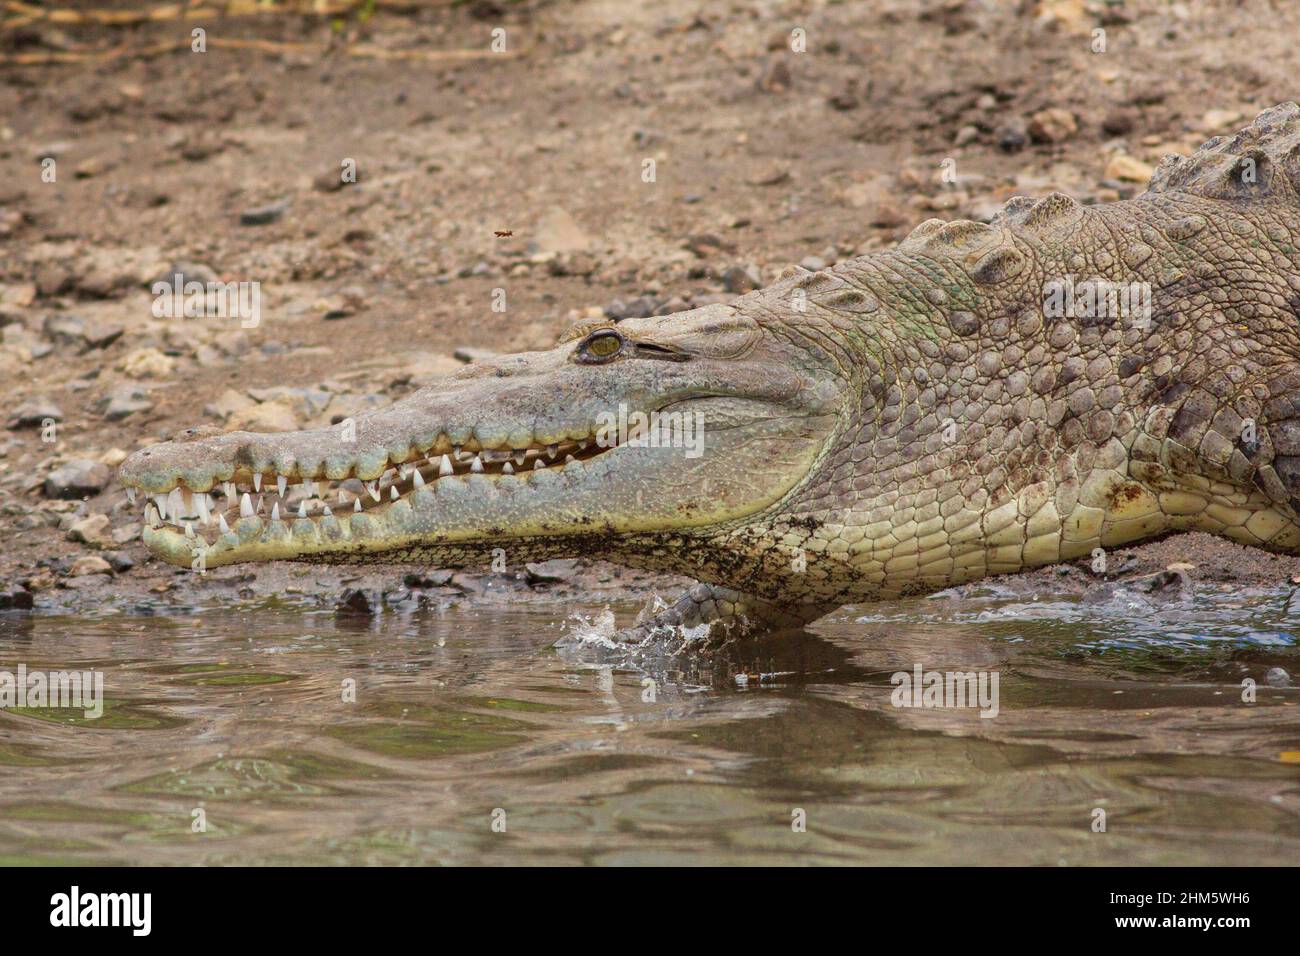 American Crocodile (Crocodylus acutus) walking into river.  River Tempisque, Guanacaste, Costa Rica. Stock Photo